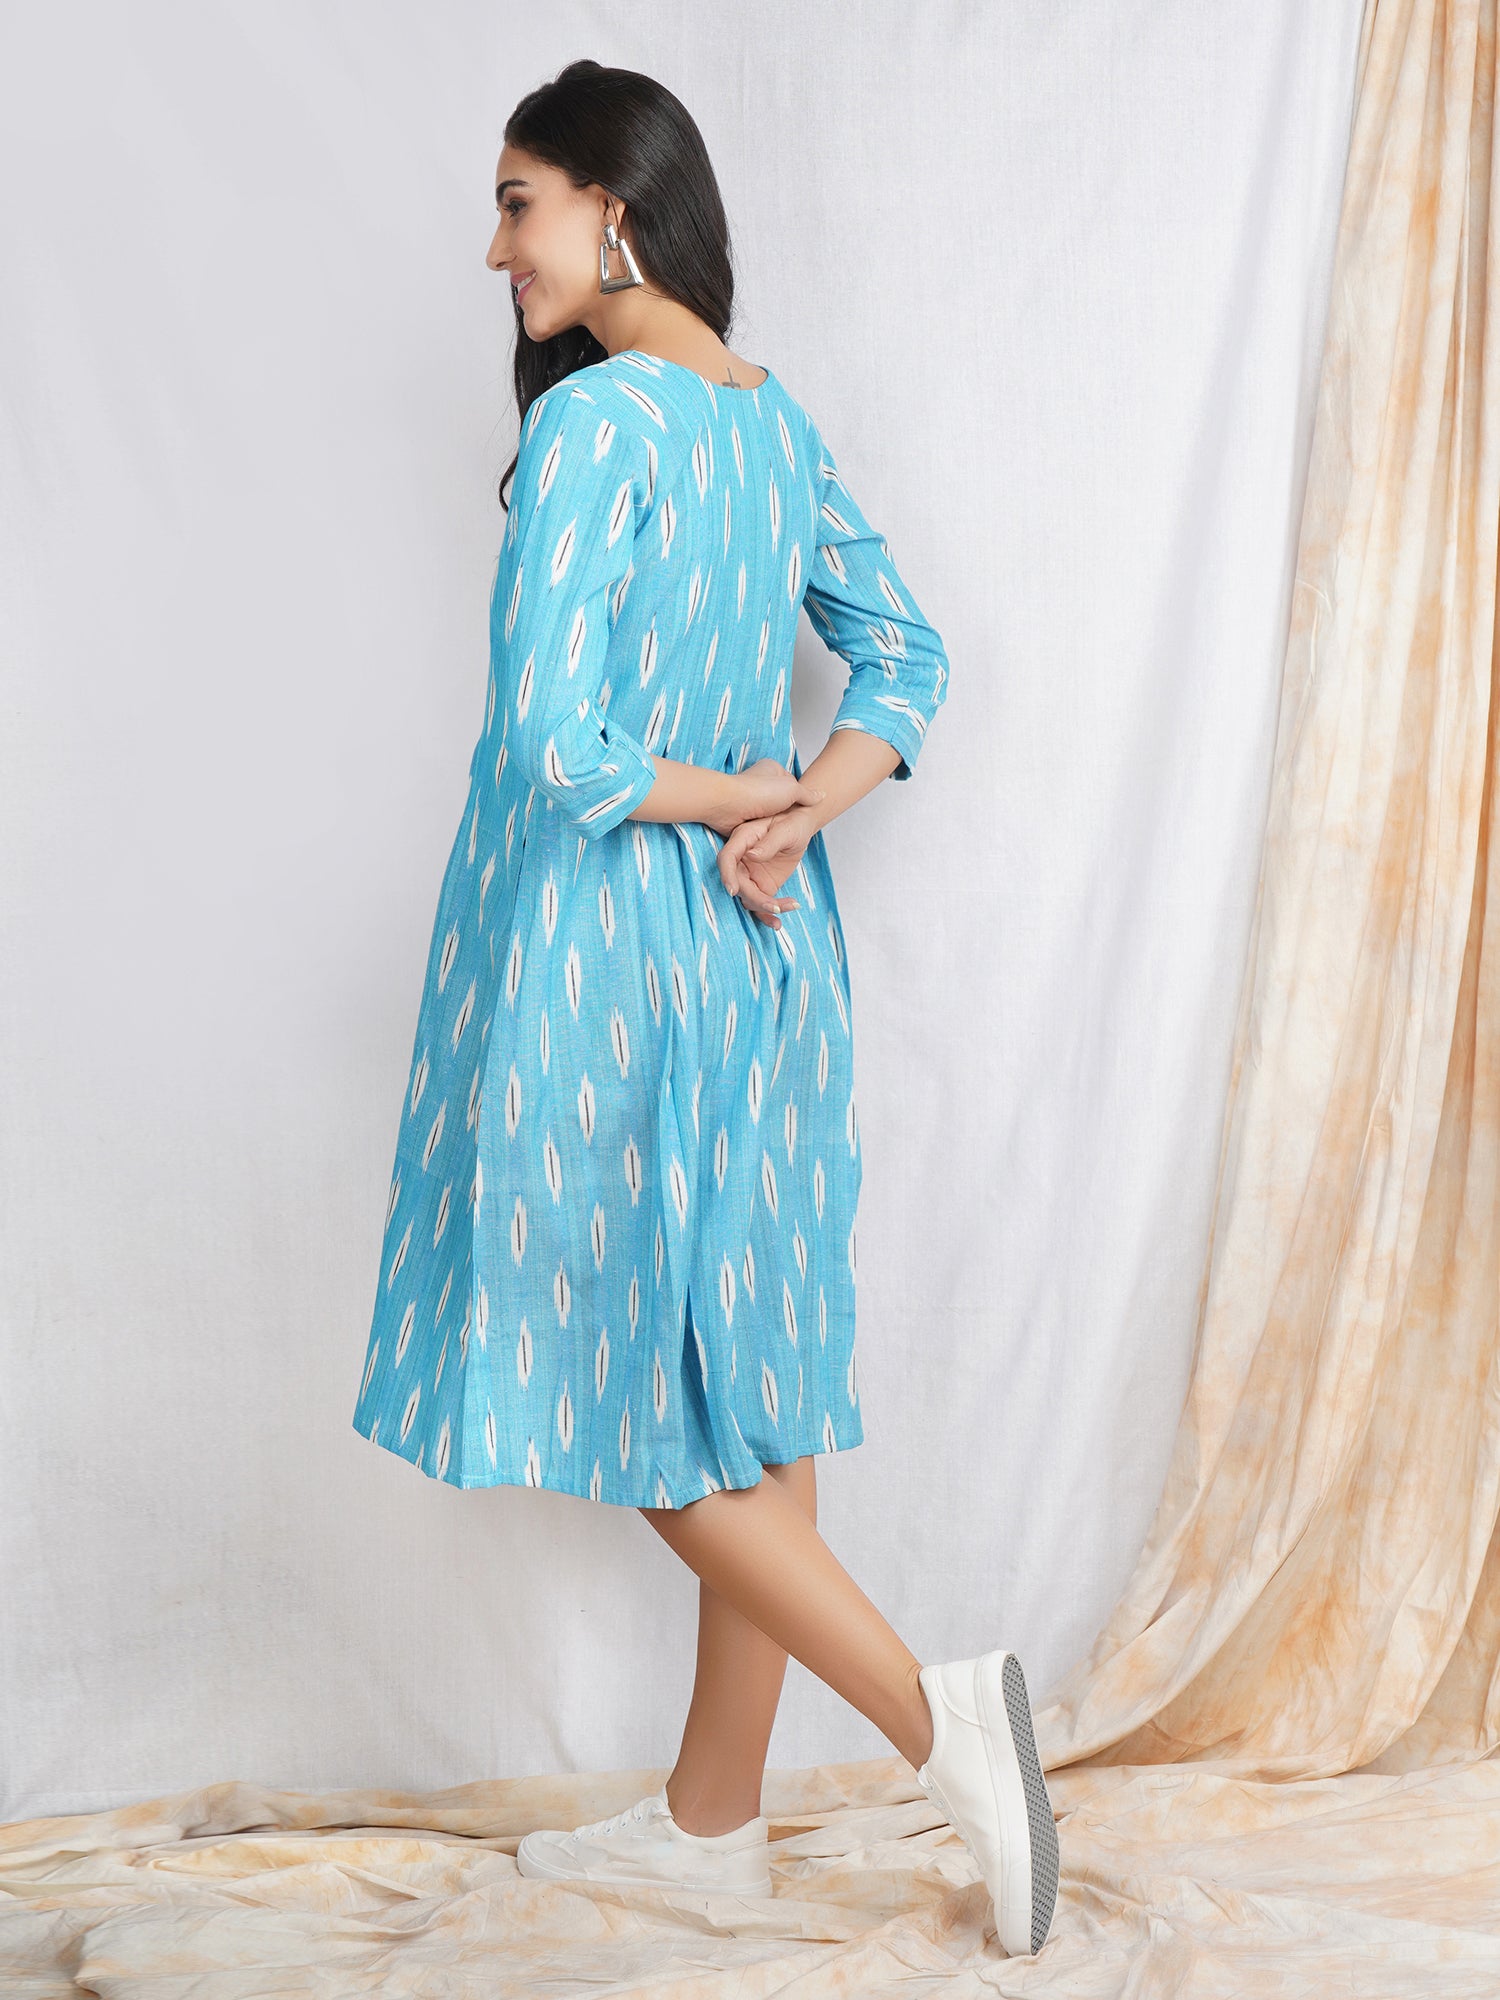 Sky blue color dress in ikat cotton